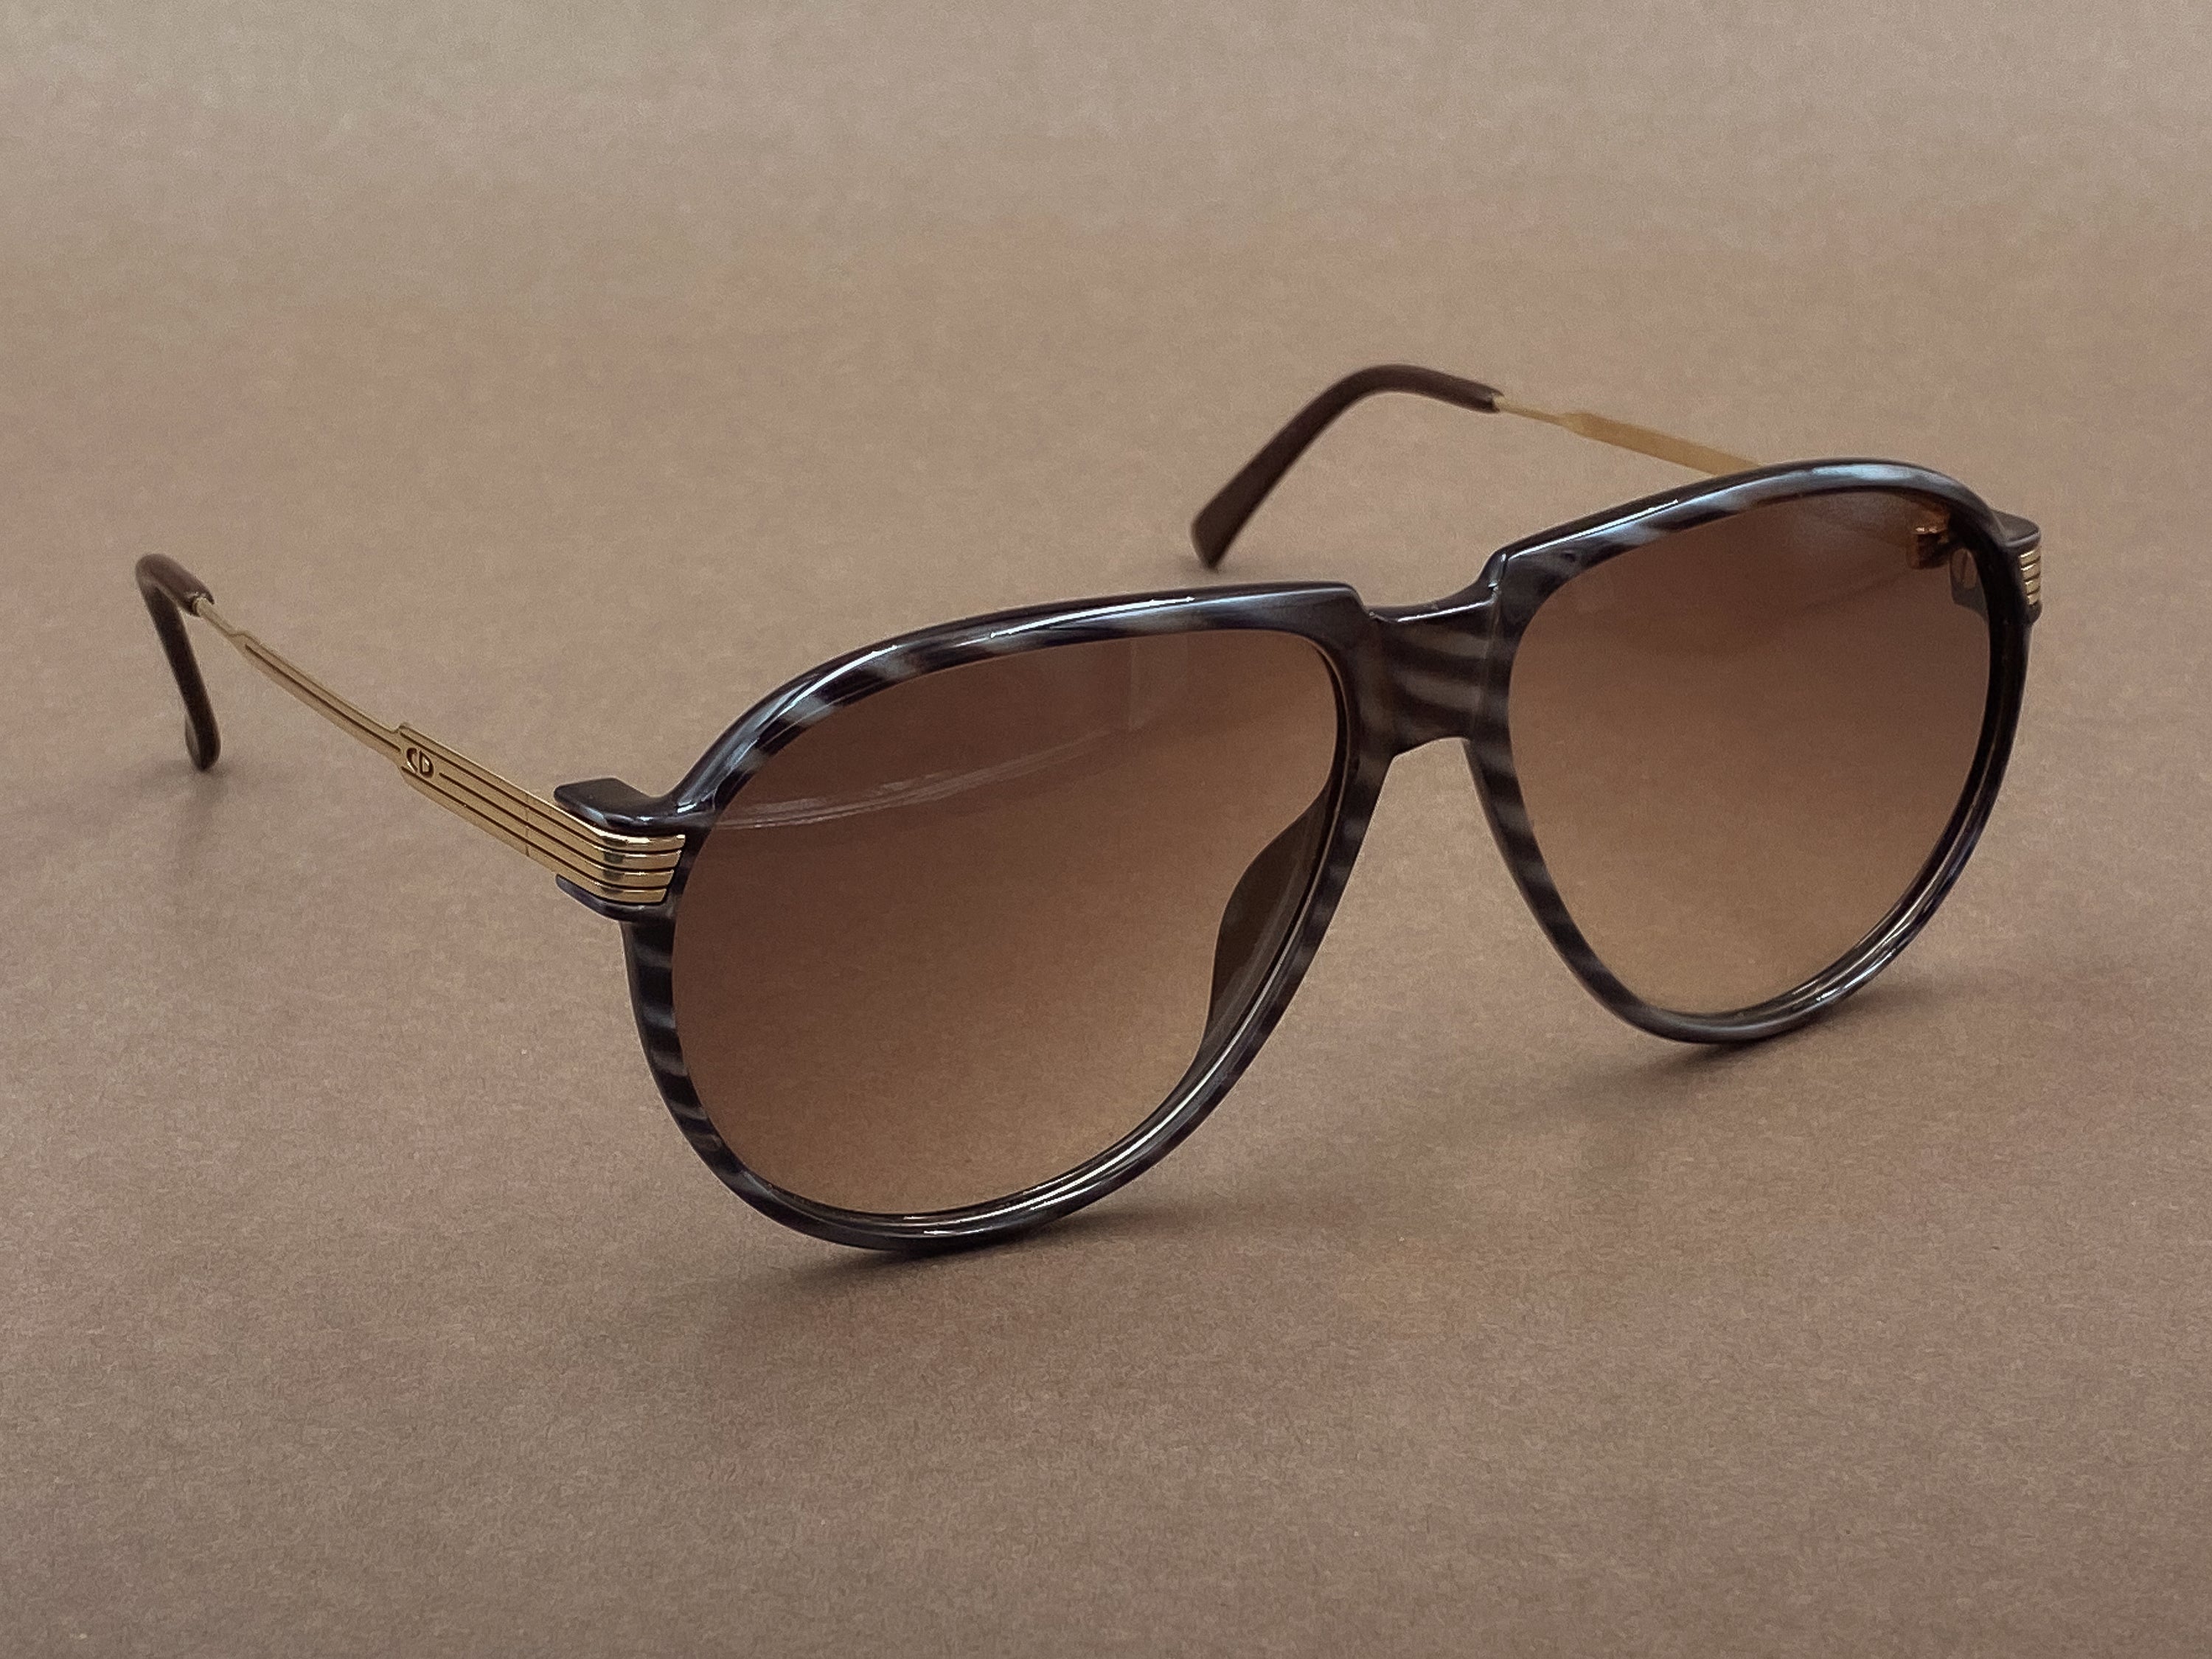 Christian Dior 2266 Monsieur series sunglasses